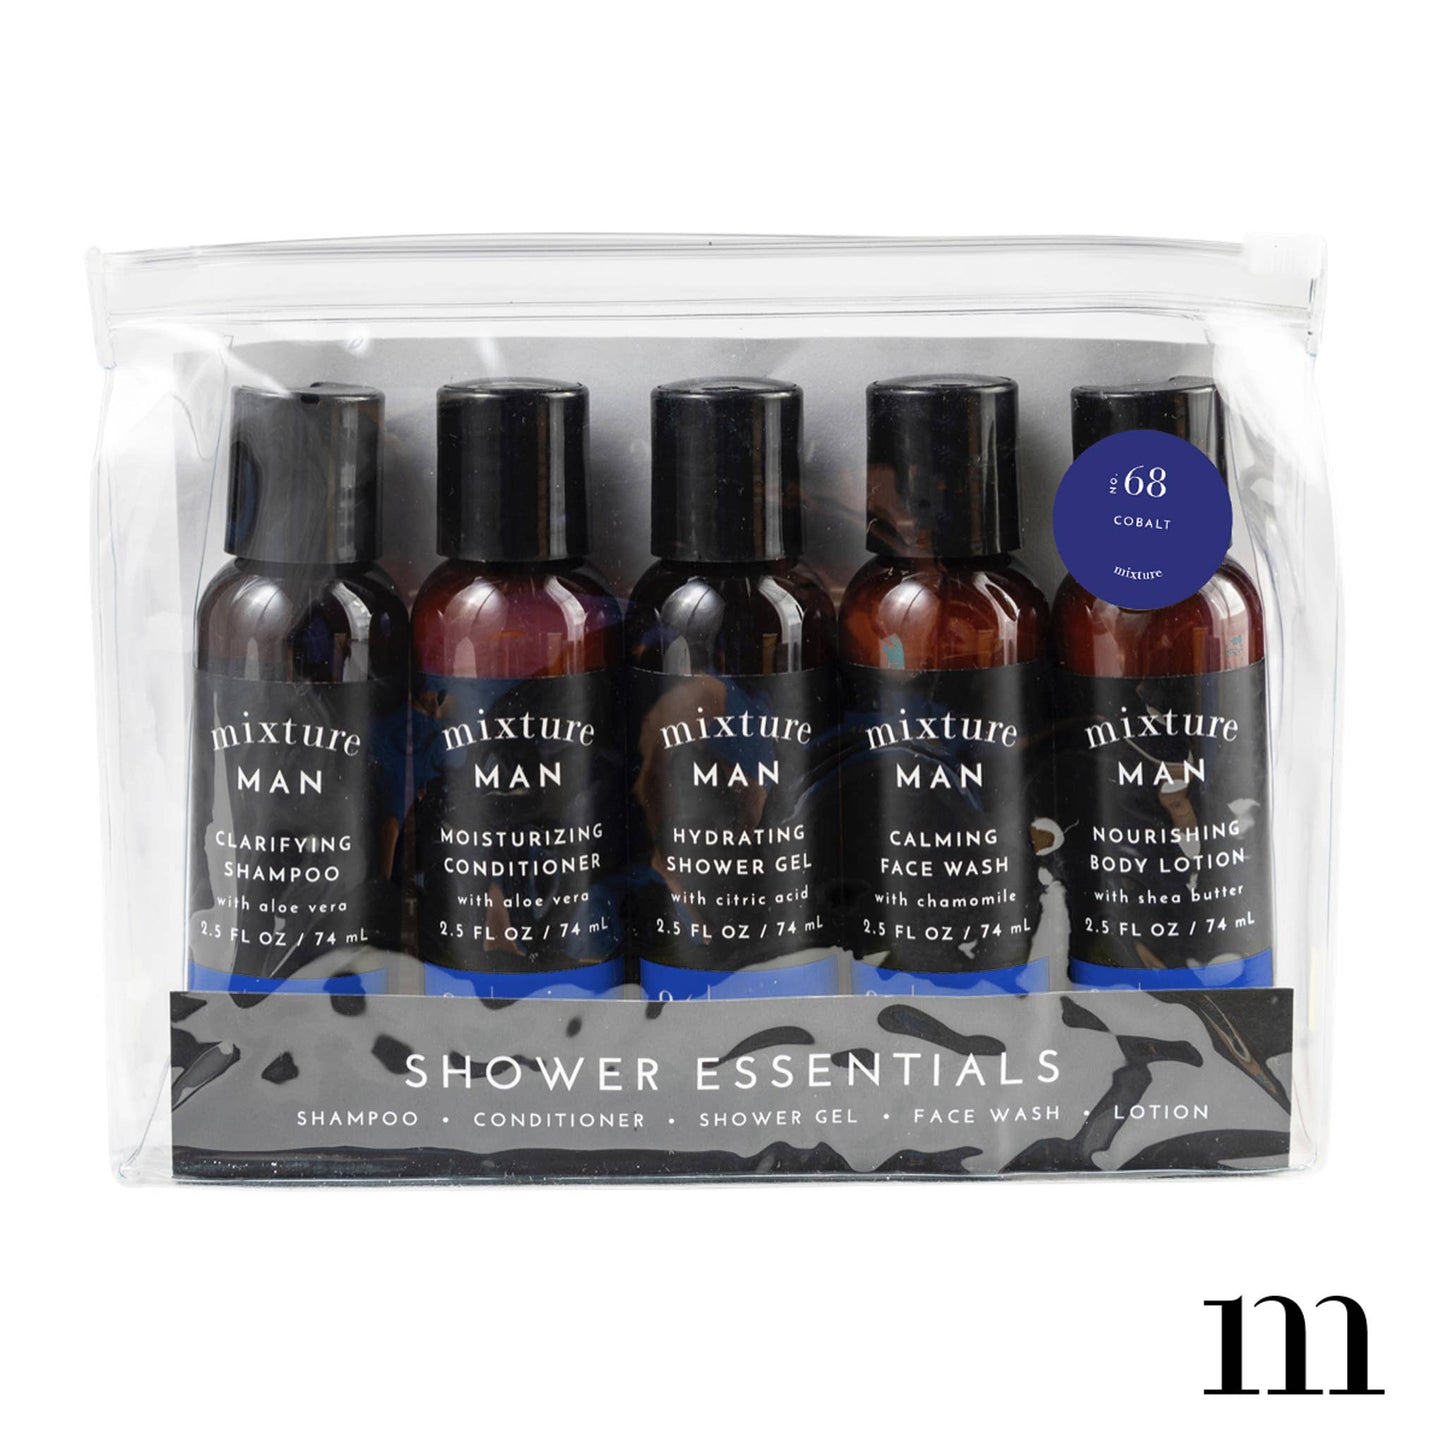 Mixture Man Shower Essentials Gift Set: No 68 Cobalt